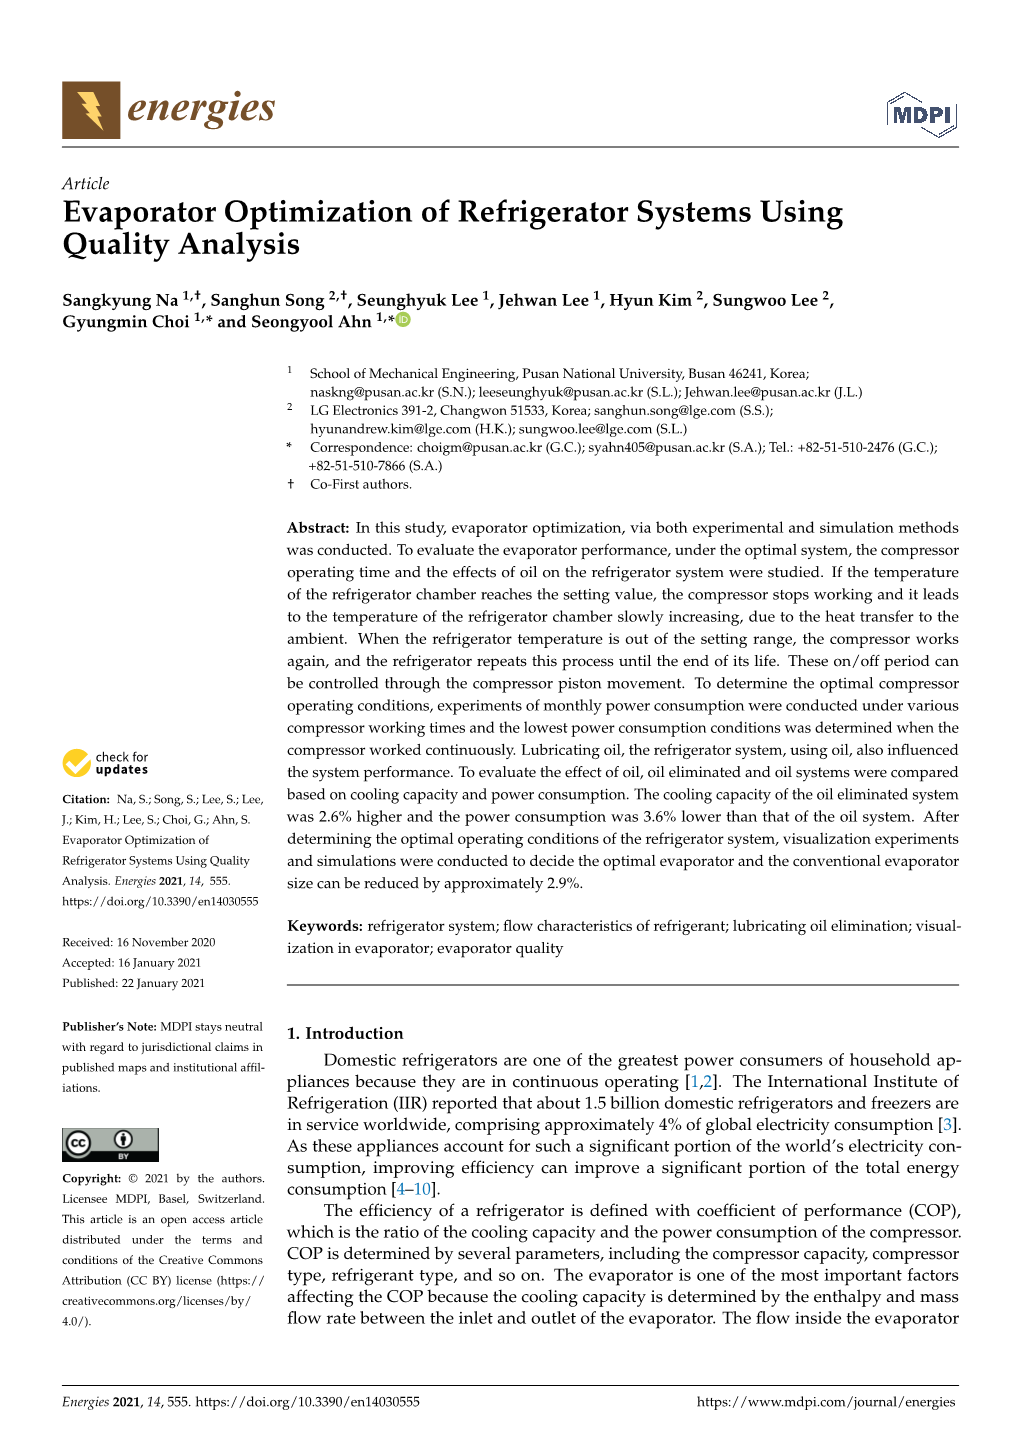 Evaporator Optimization of Refrigerator Systems Using Quality Analysis